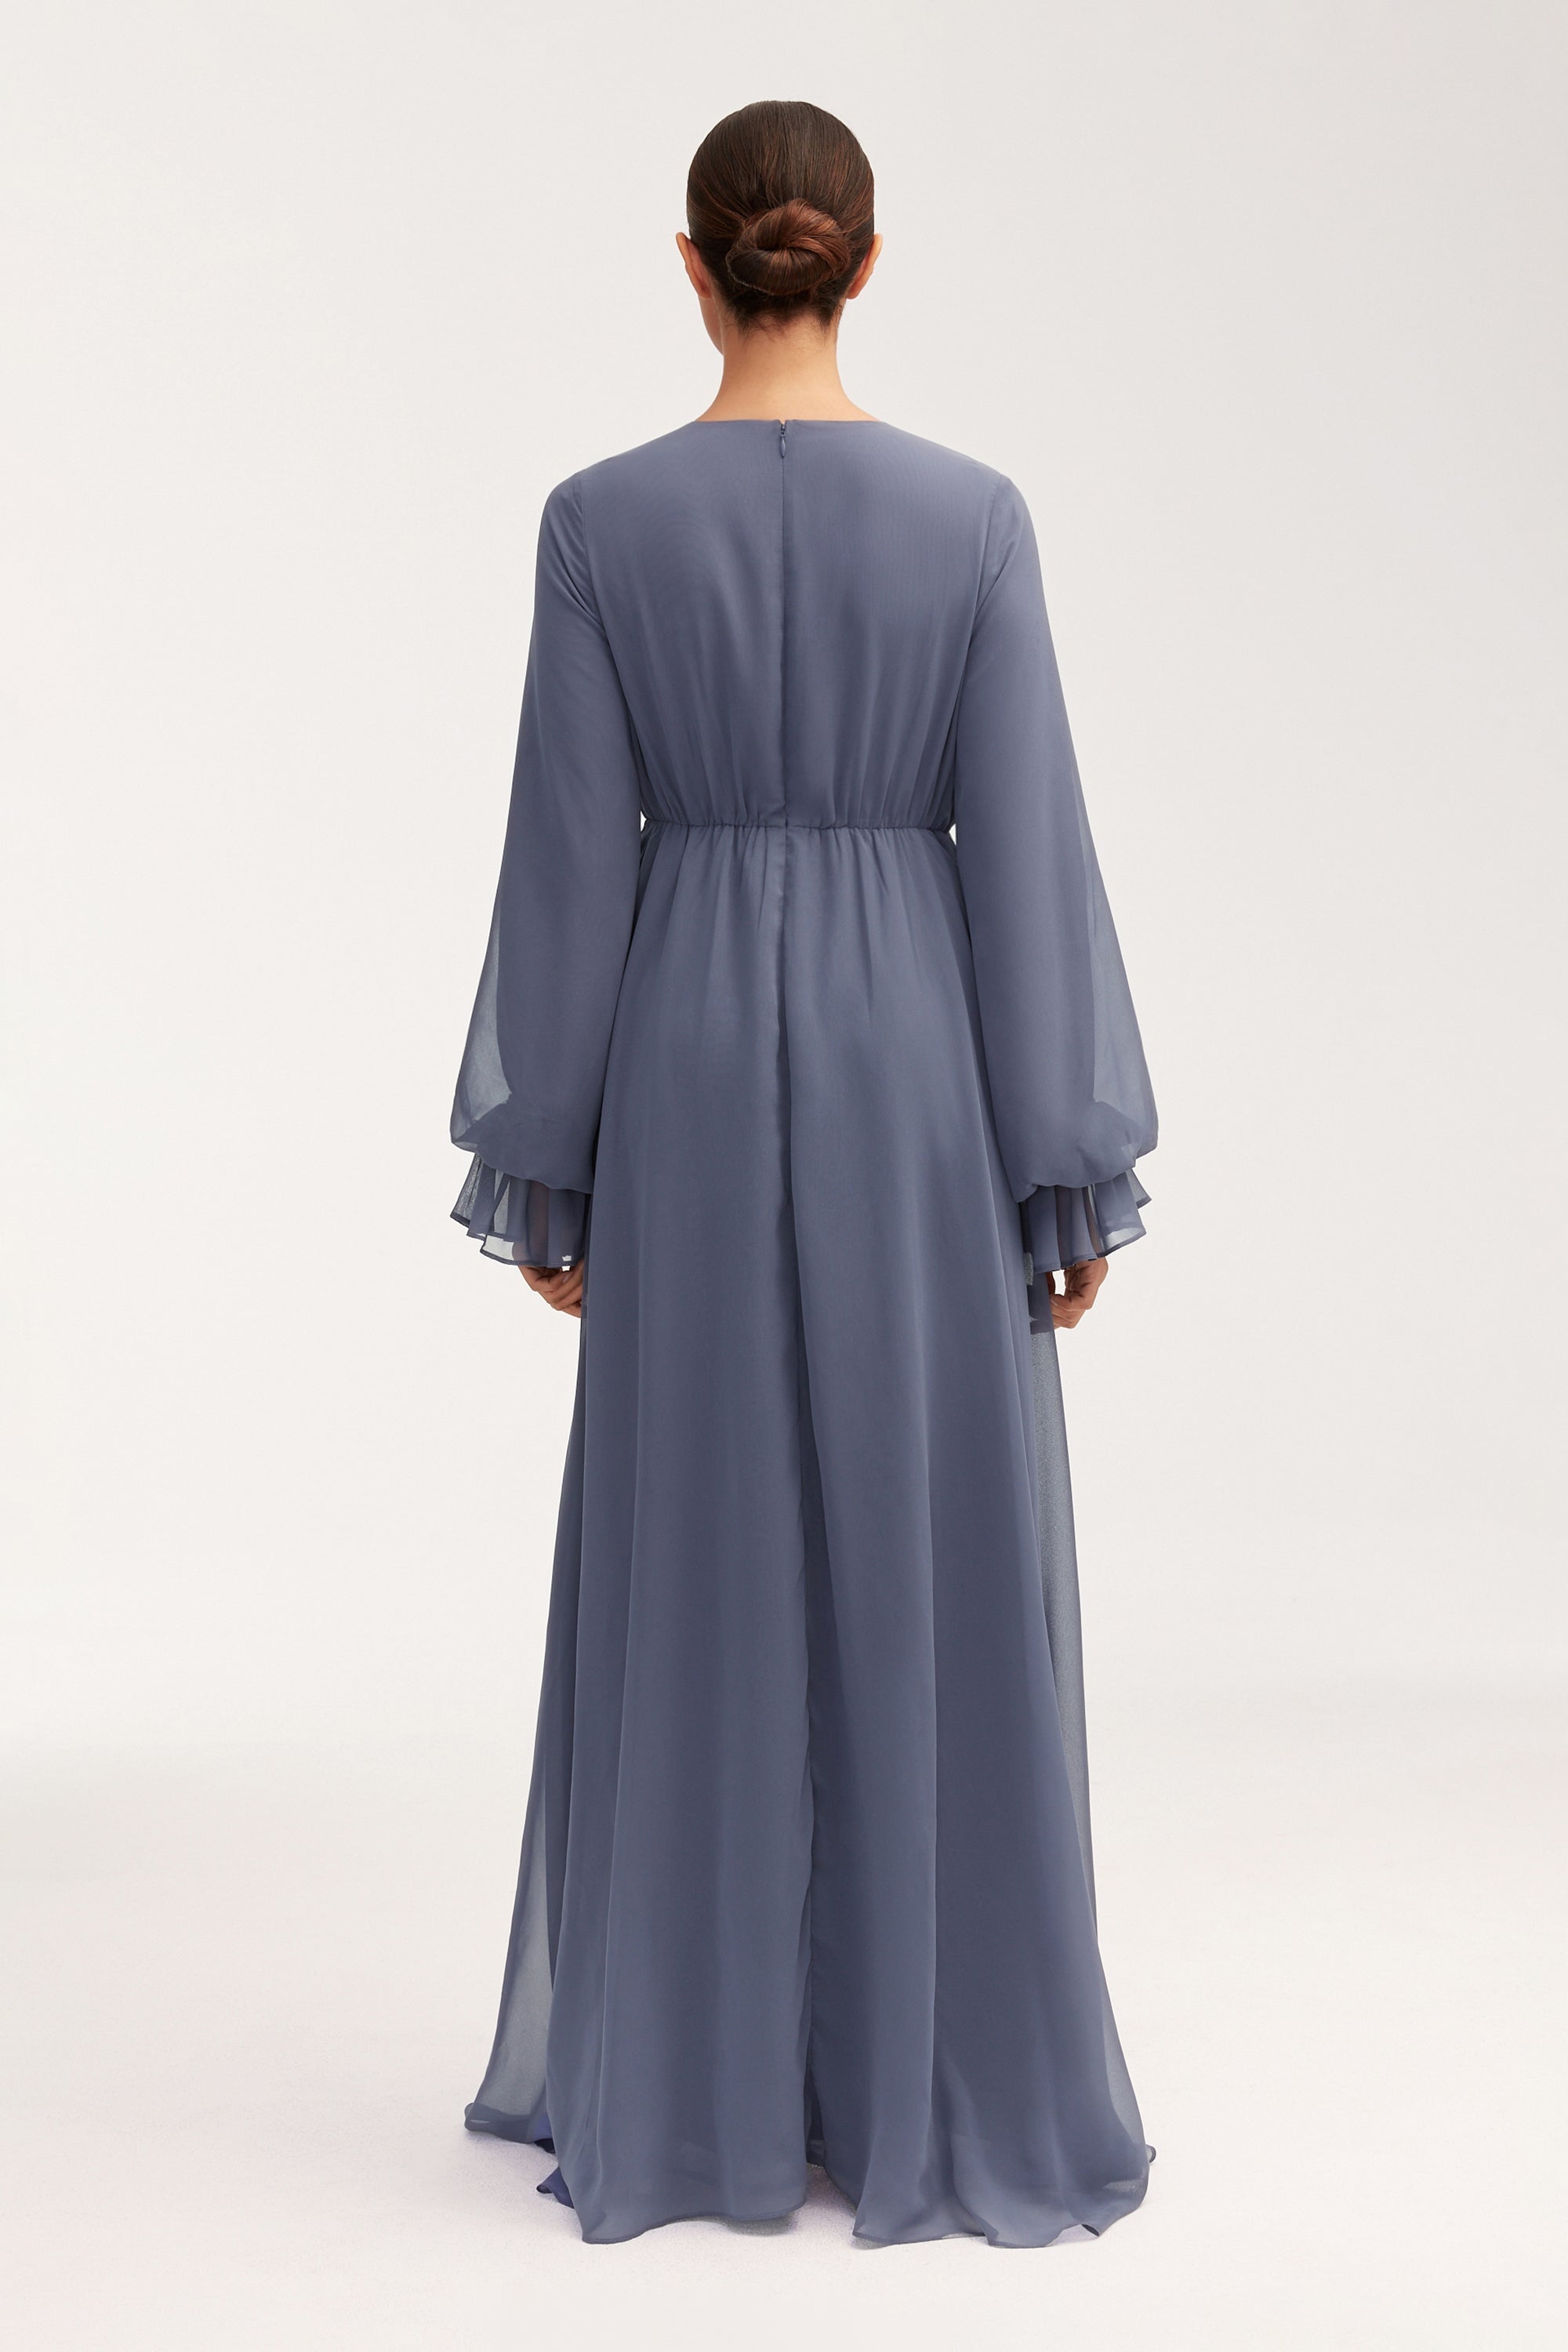 Aara Chiffon Maxi Dress - Dusk Clothing Veiled 